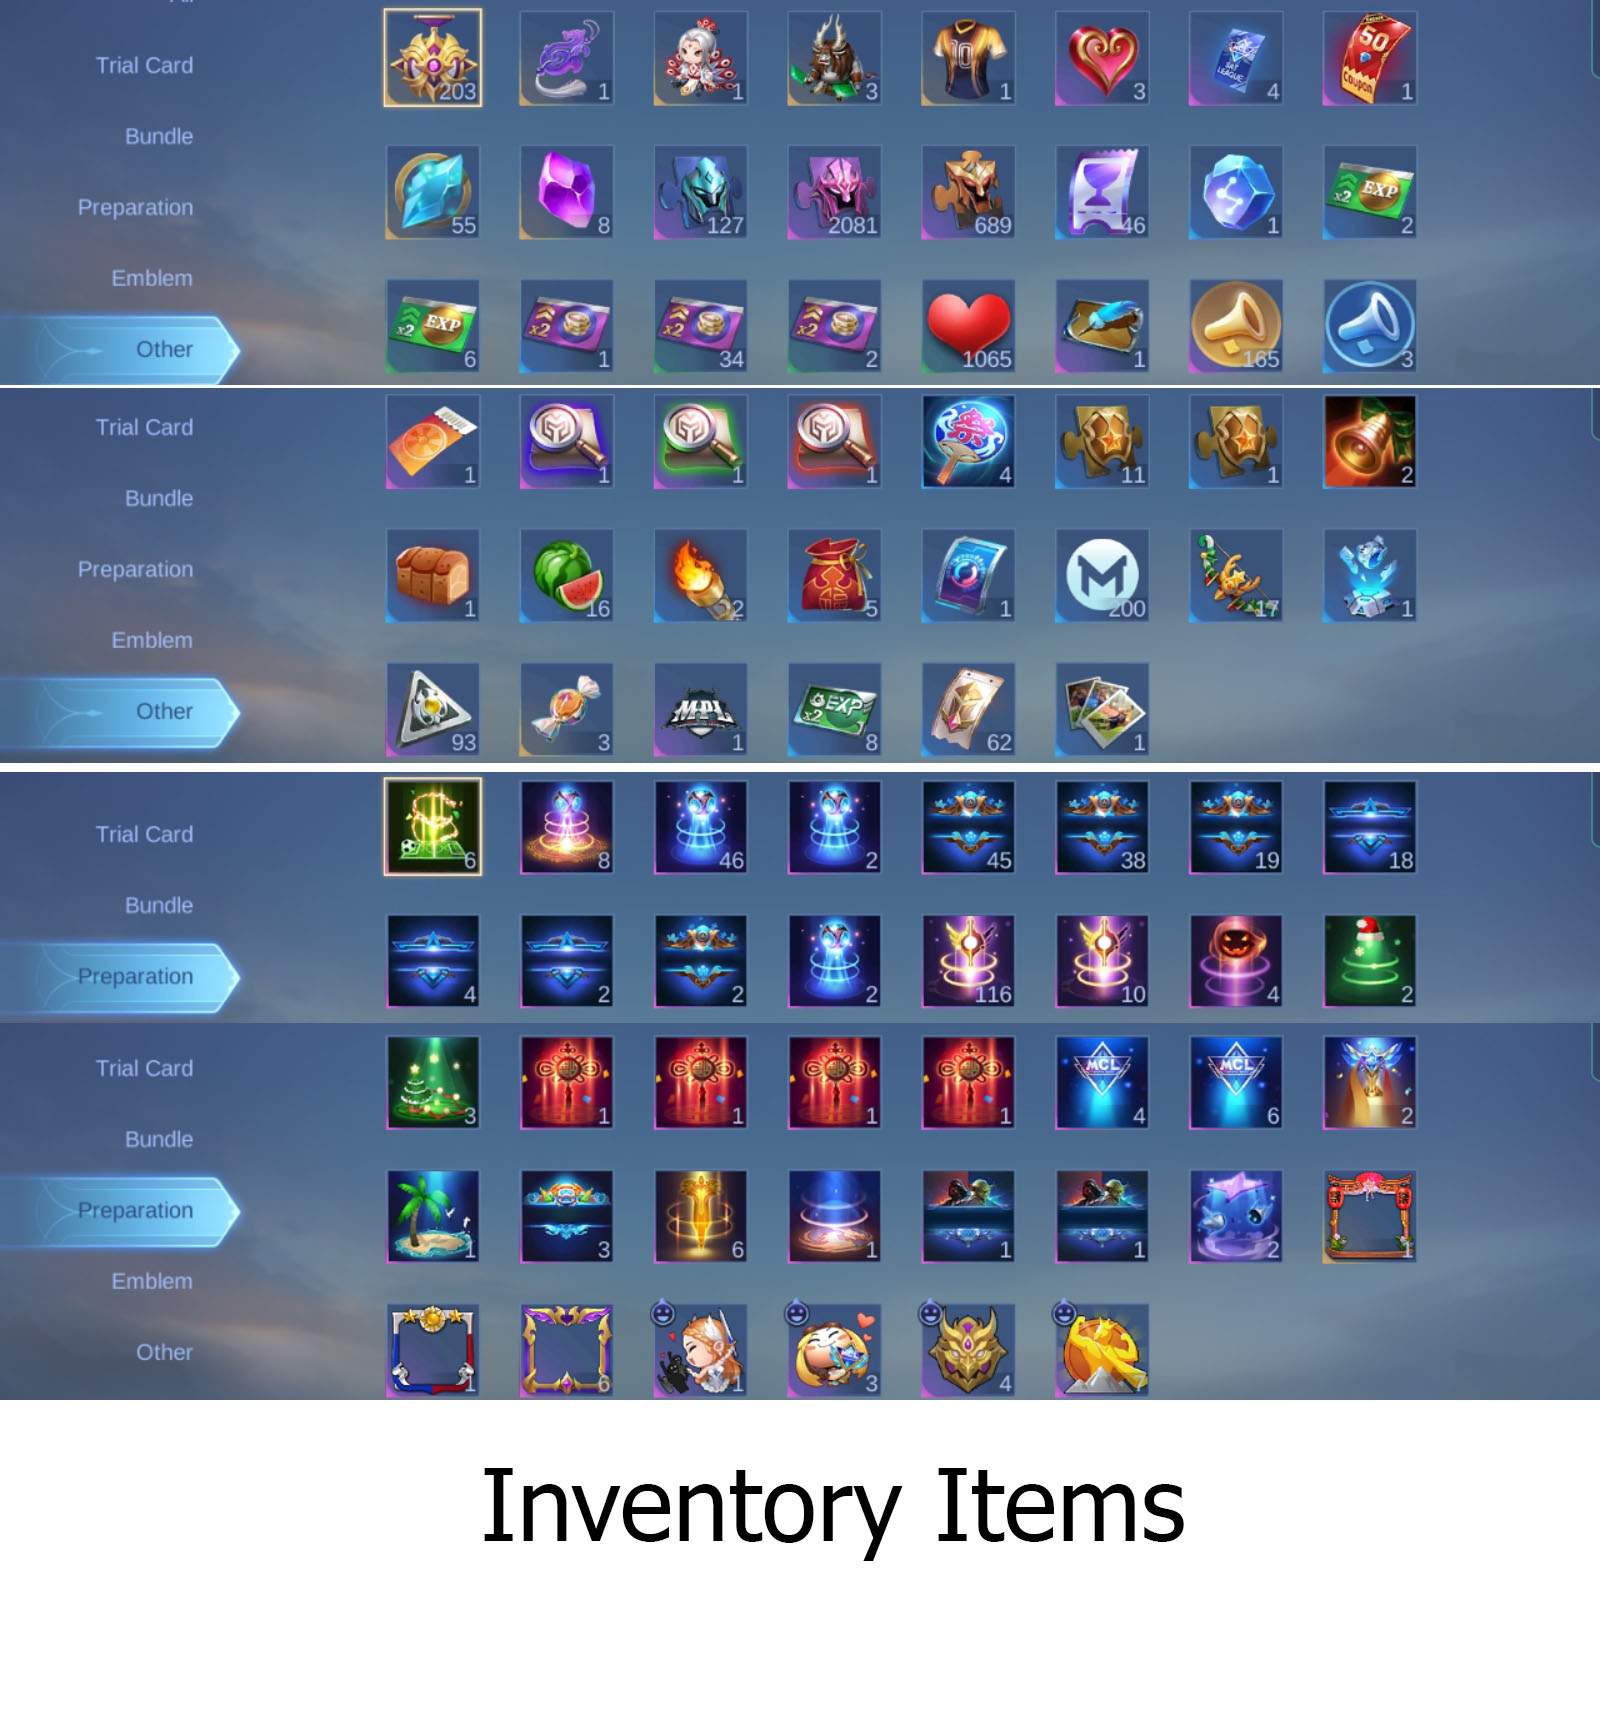 Inventory items.jpg